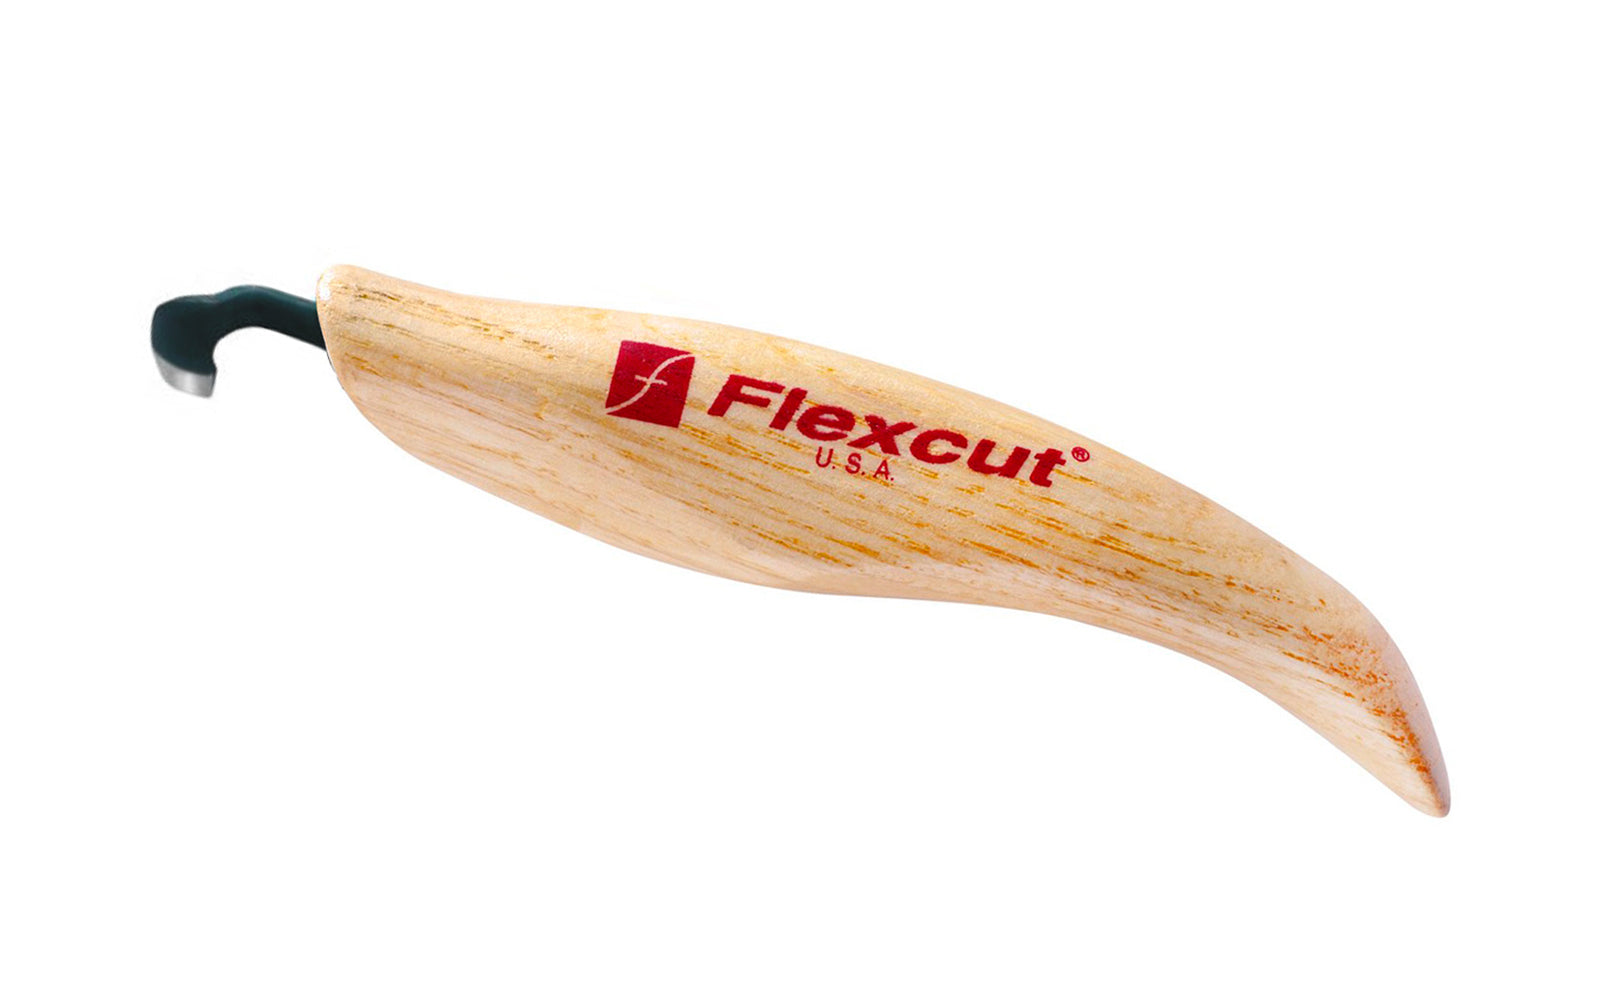 Flexcut - Chip Carving Knife